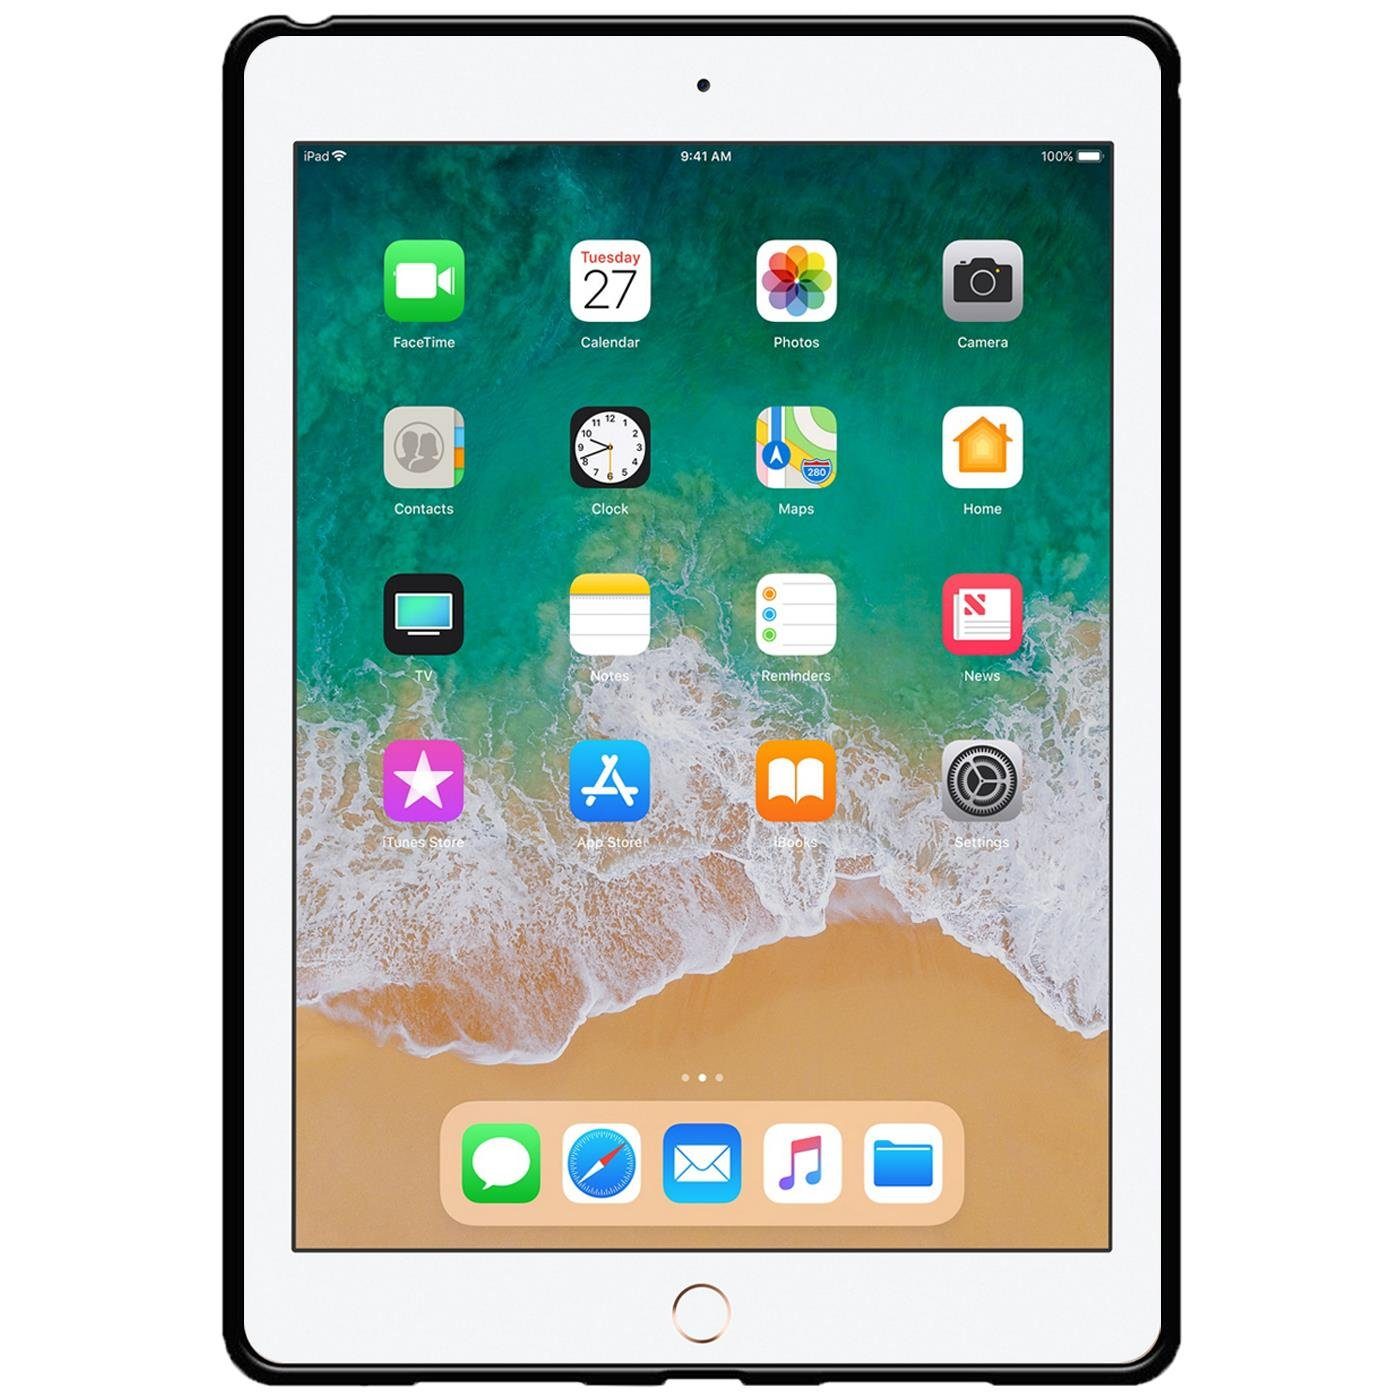 CoolGadget Tablet-Hülle »Silikon Case Tablet Hülle Für iPad Air« 24,6 cm  (9,7 Zoll), Hülle Schutzhülle matt Slim Cover für Apple iPad Air 1.  Generation